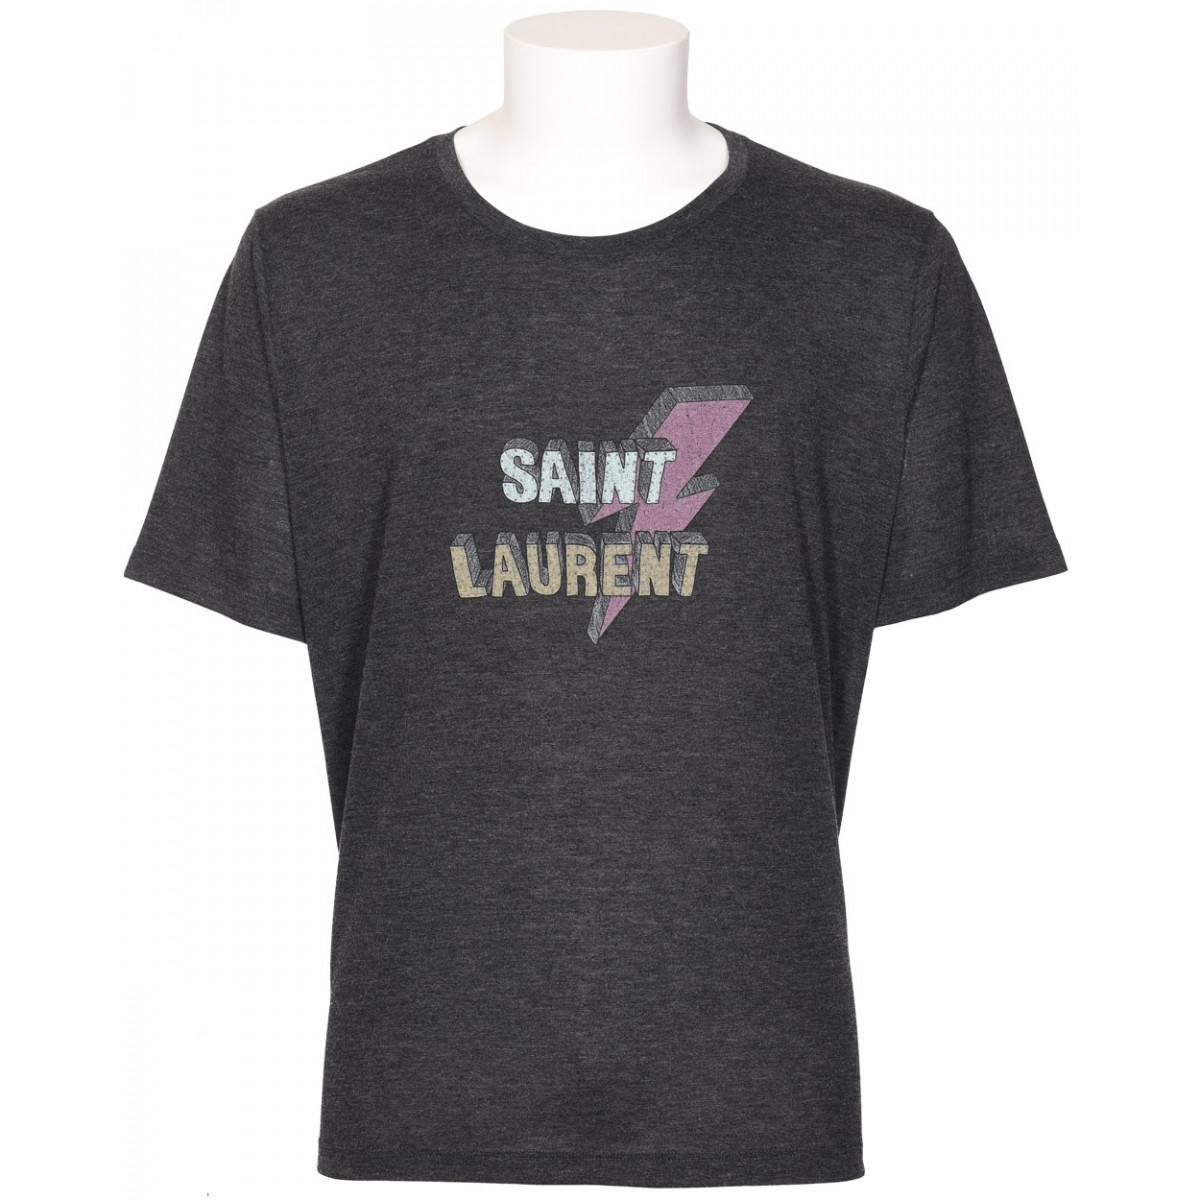 S独特の素材平野紫耀着用 saint laurent ロゴtシャツ Tシャツ 